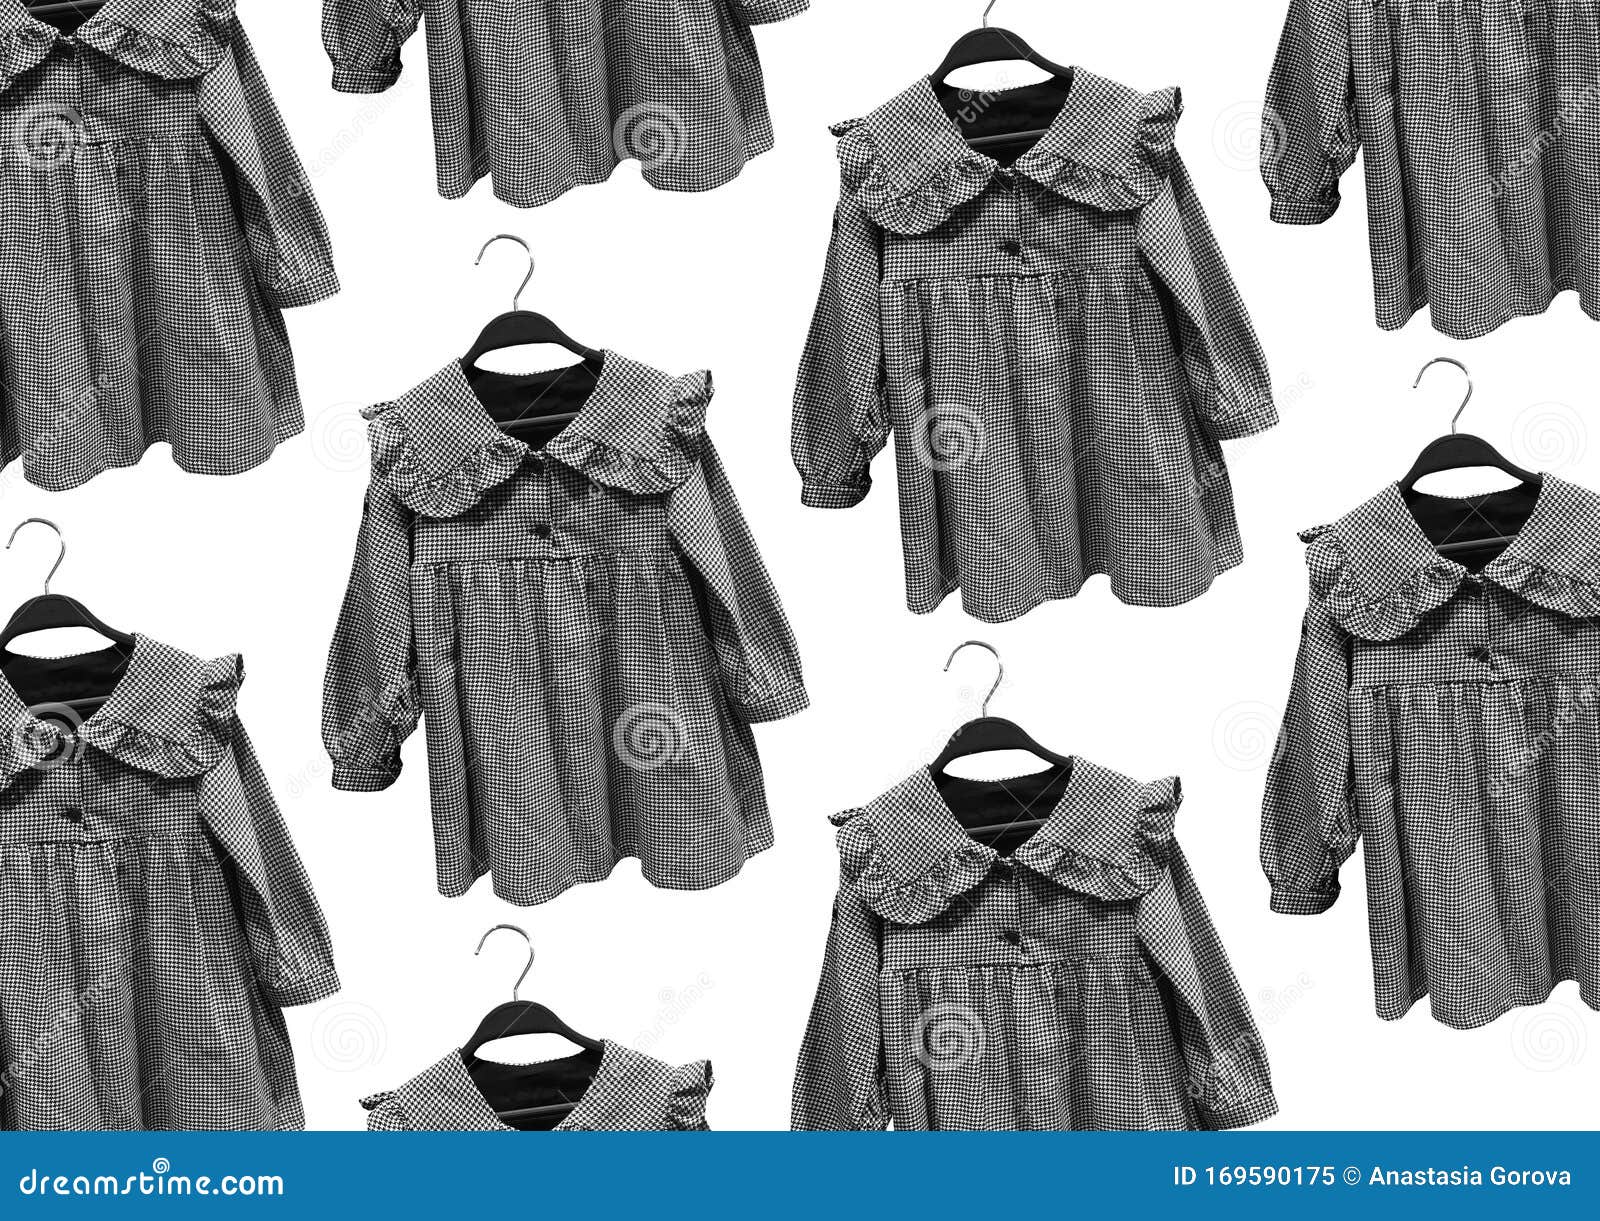 Mathis Bien educado Esperar Black and White Puritan Collar Dress Pattern Stock Image - Image of  garment, baby: 169590175